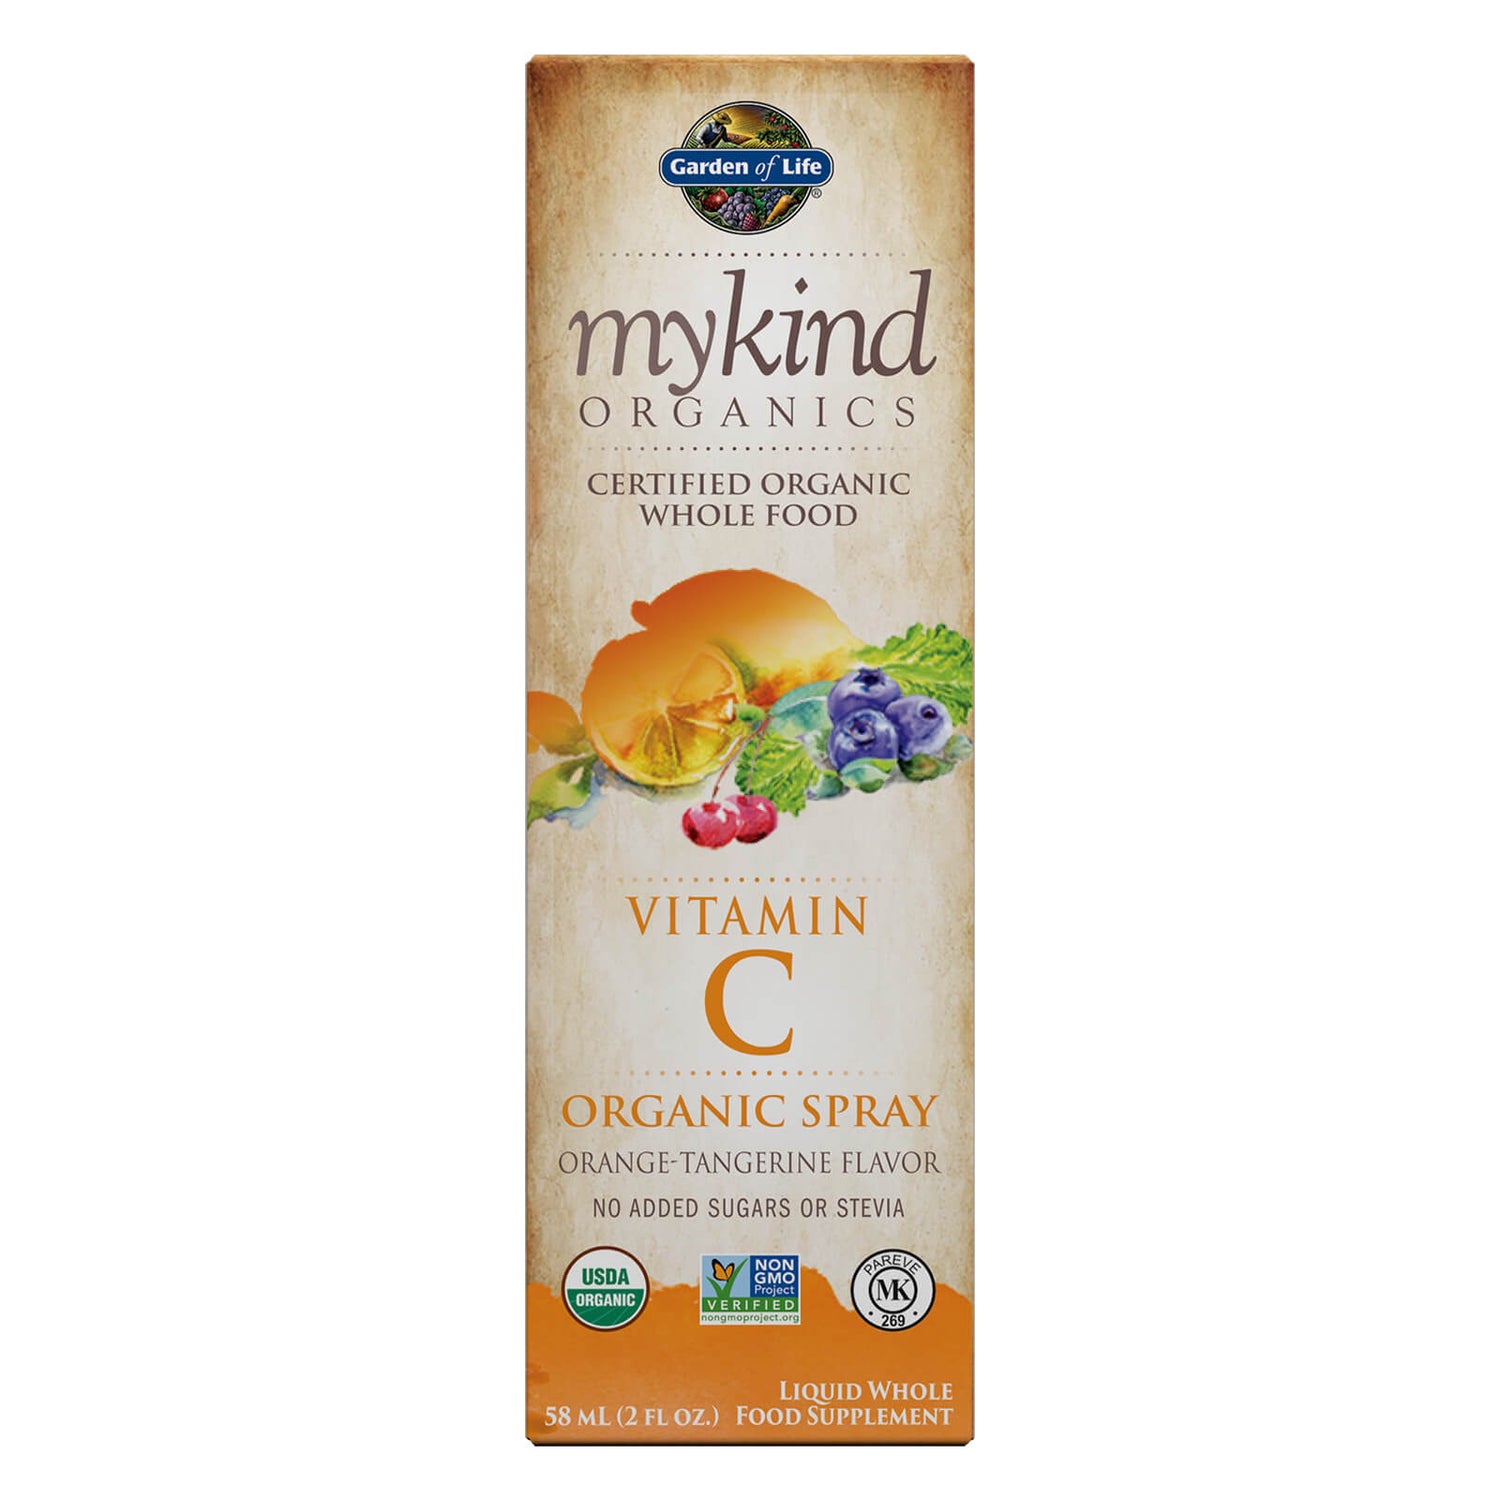 Espray de vitamina C mykind Organics - Naranja y mandarina - 58 ml